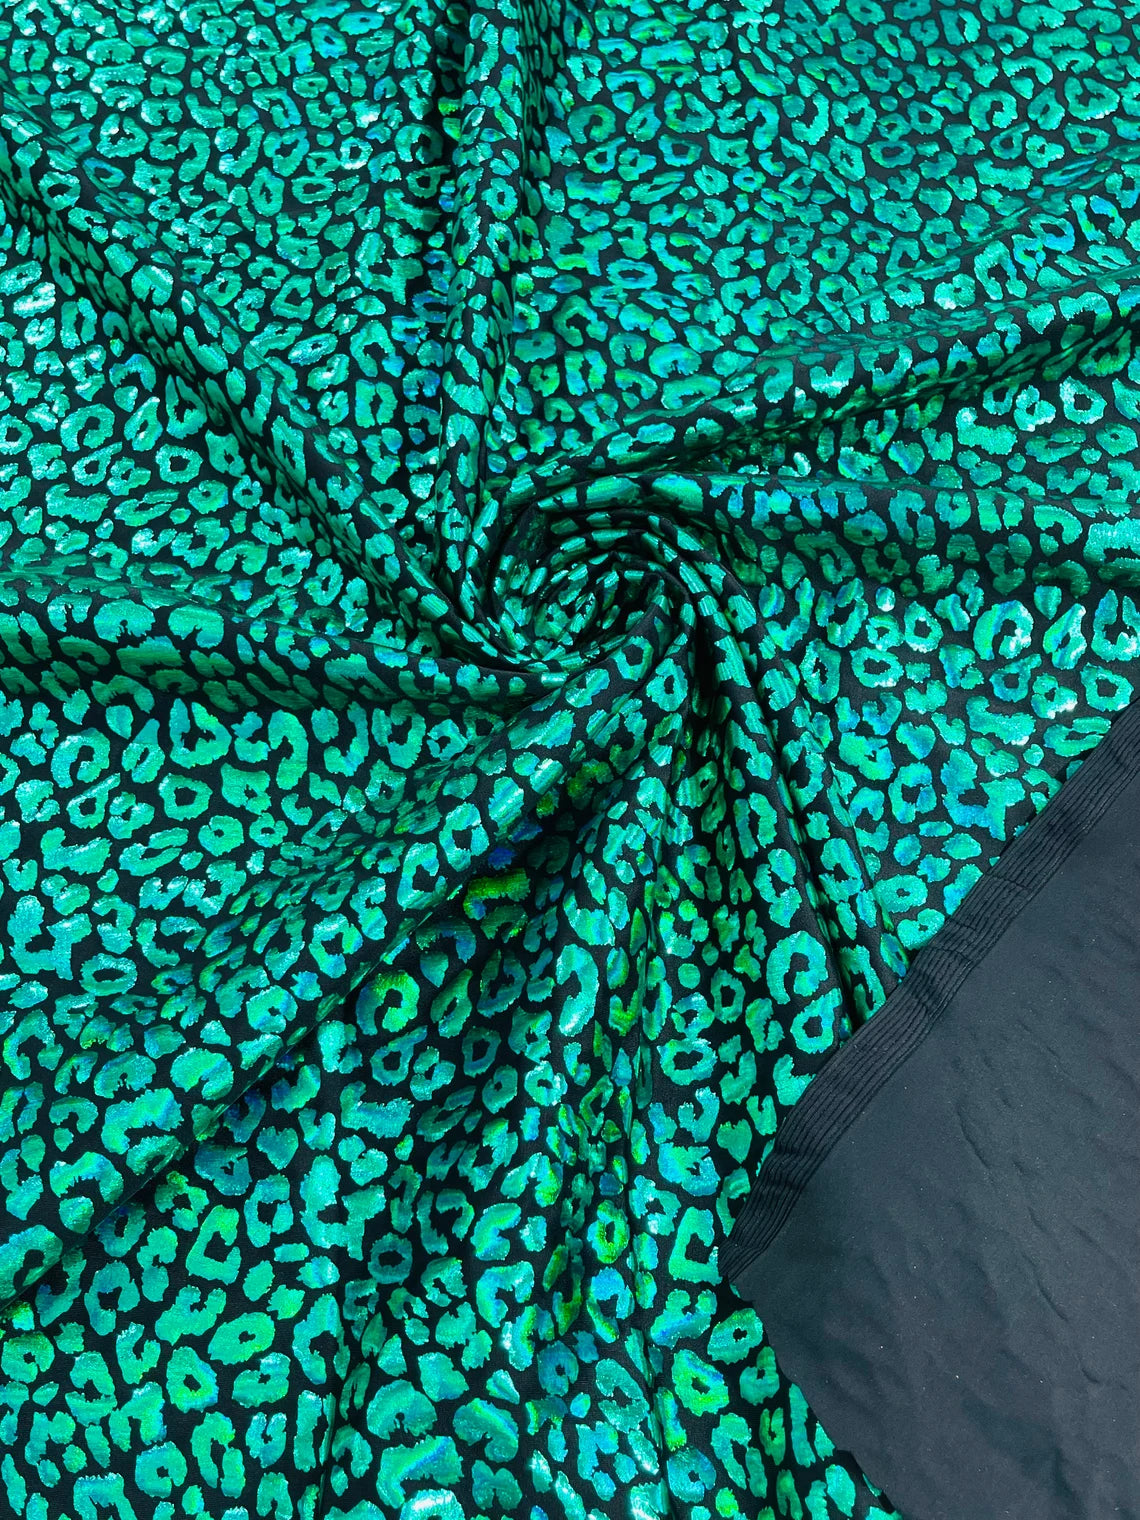 Cheetah Rainbow Print on 4 Way Stretch Polyester Spandex Fabric by